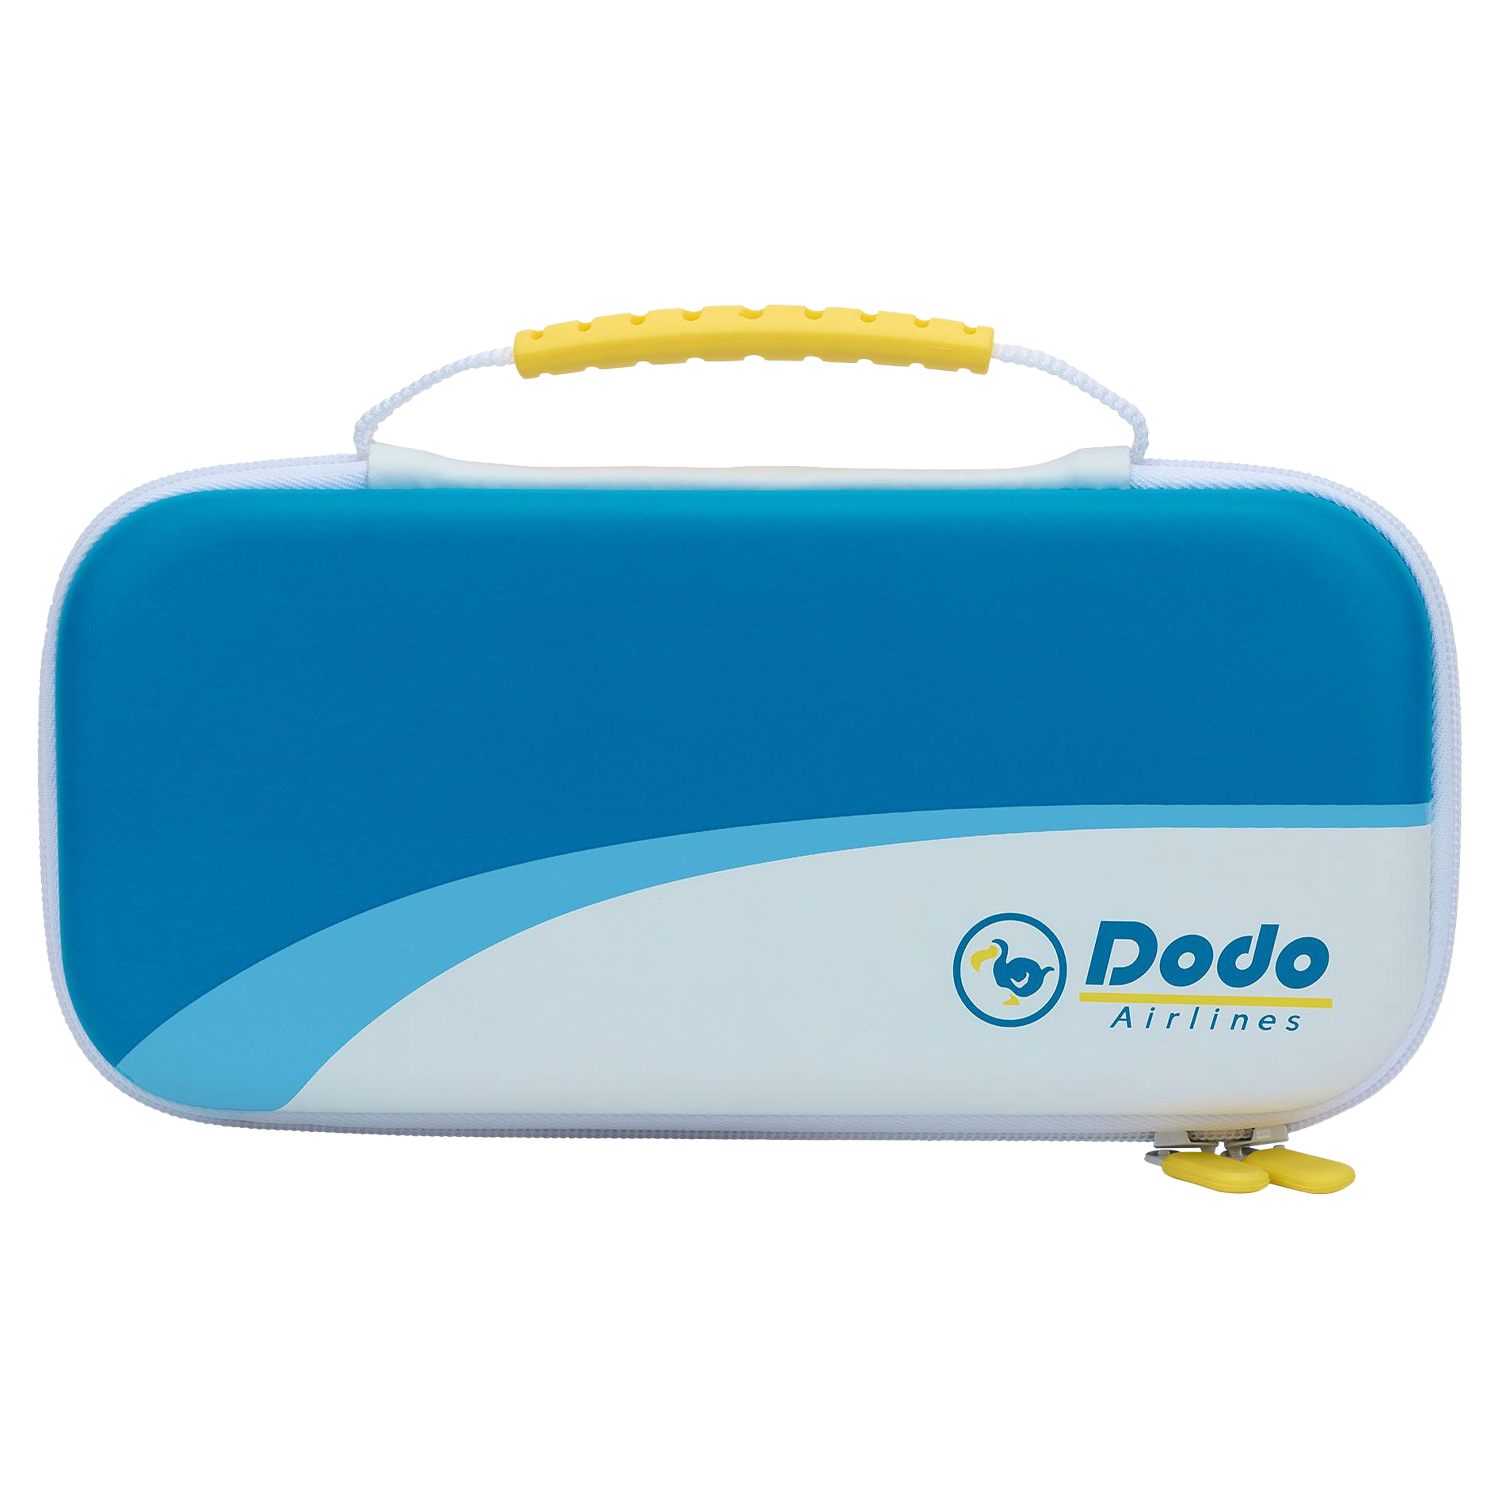 Case Protetor PowerA para Nintendo Switch - Animal Crossing: Dodo Airlines (PWA-A-2833)